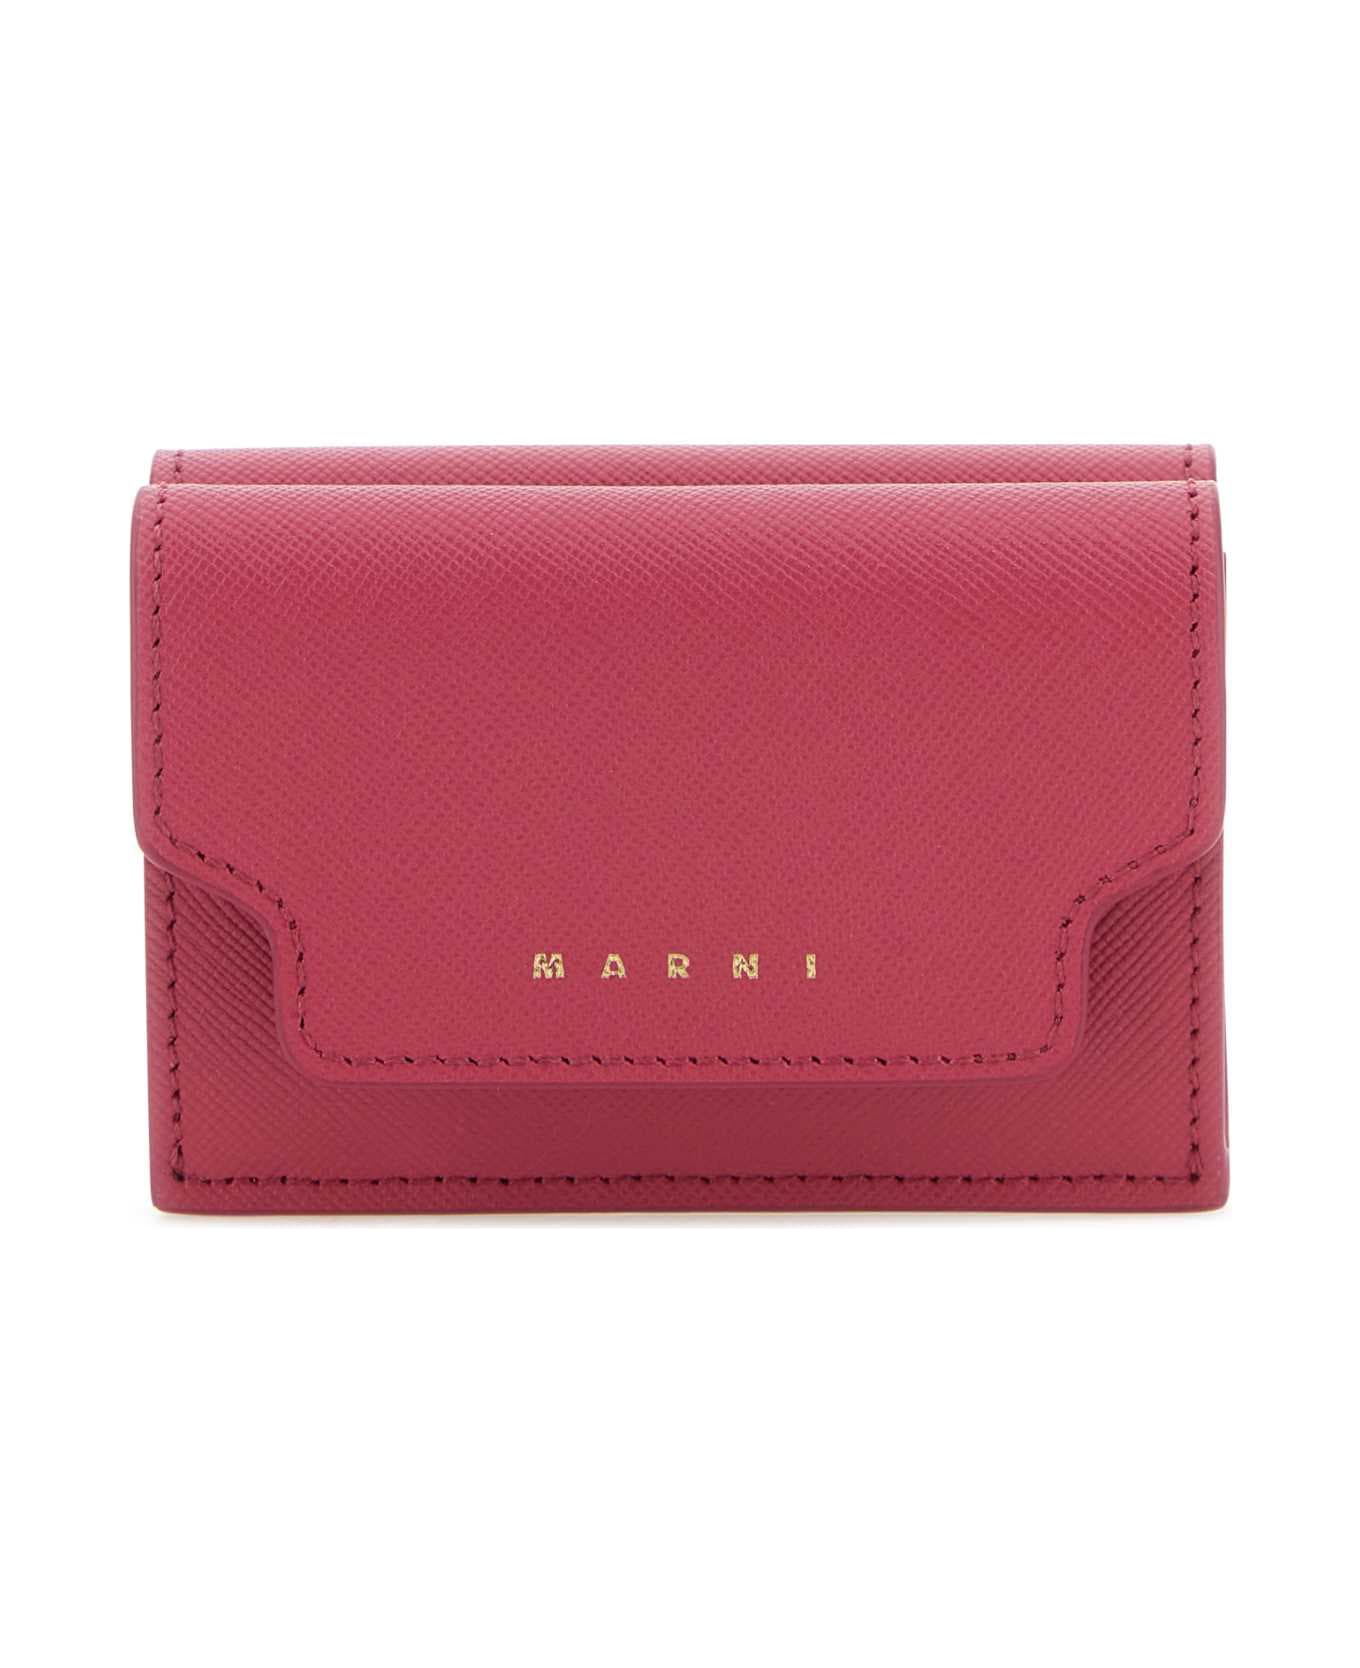 Marni Tyrian Purple Leather Wallet - LIGHTORCHID 財布